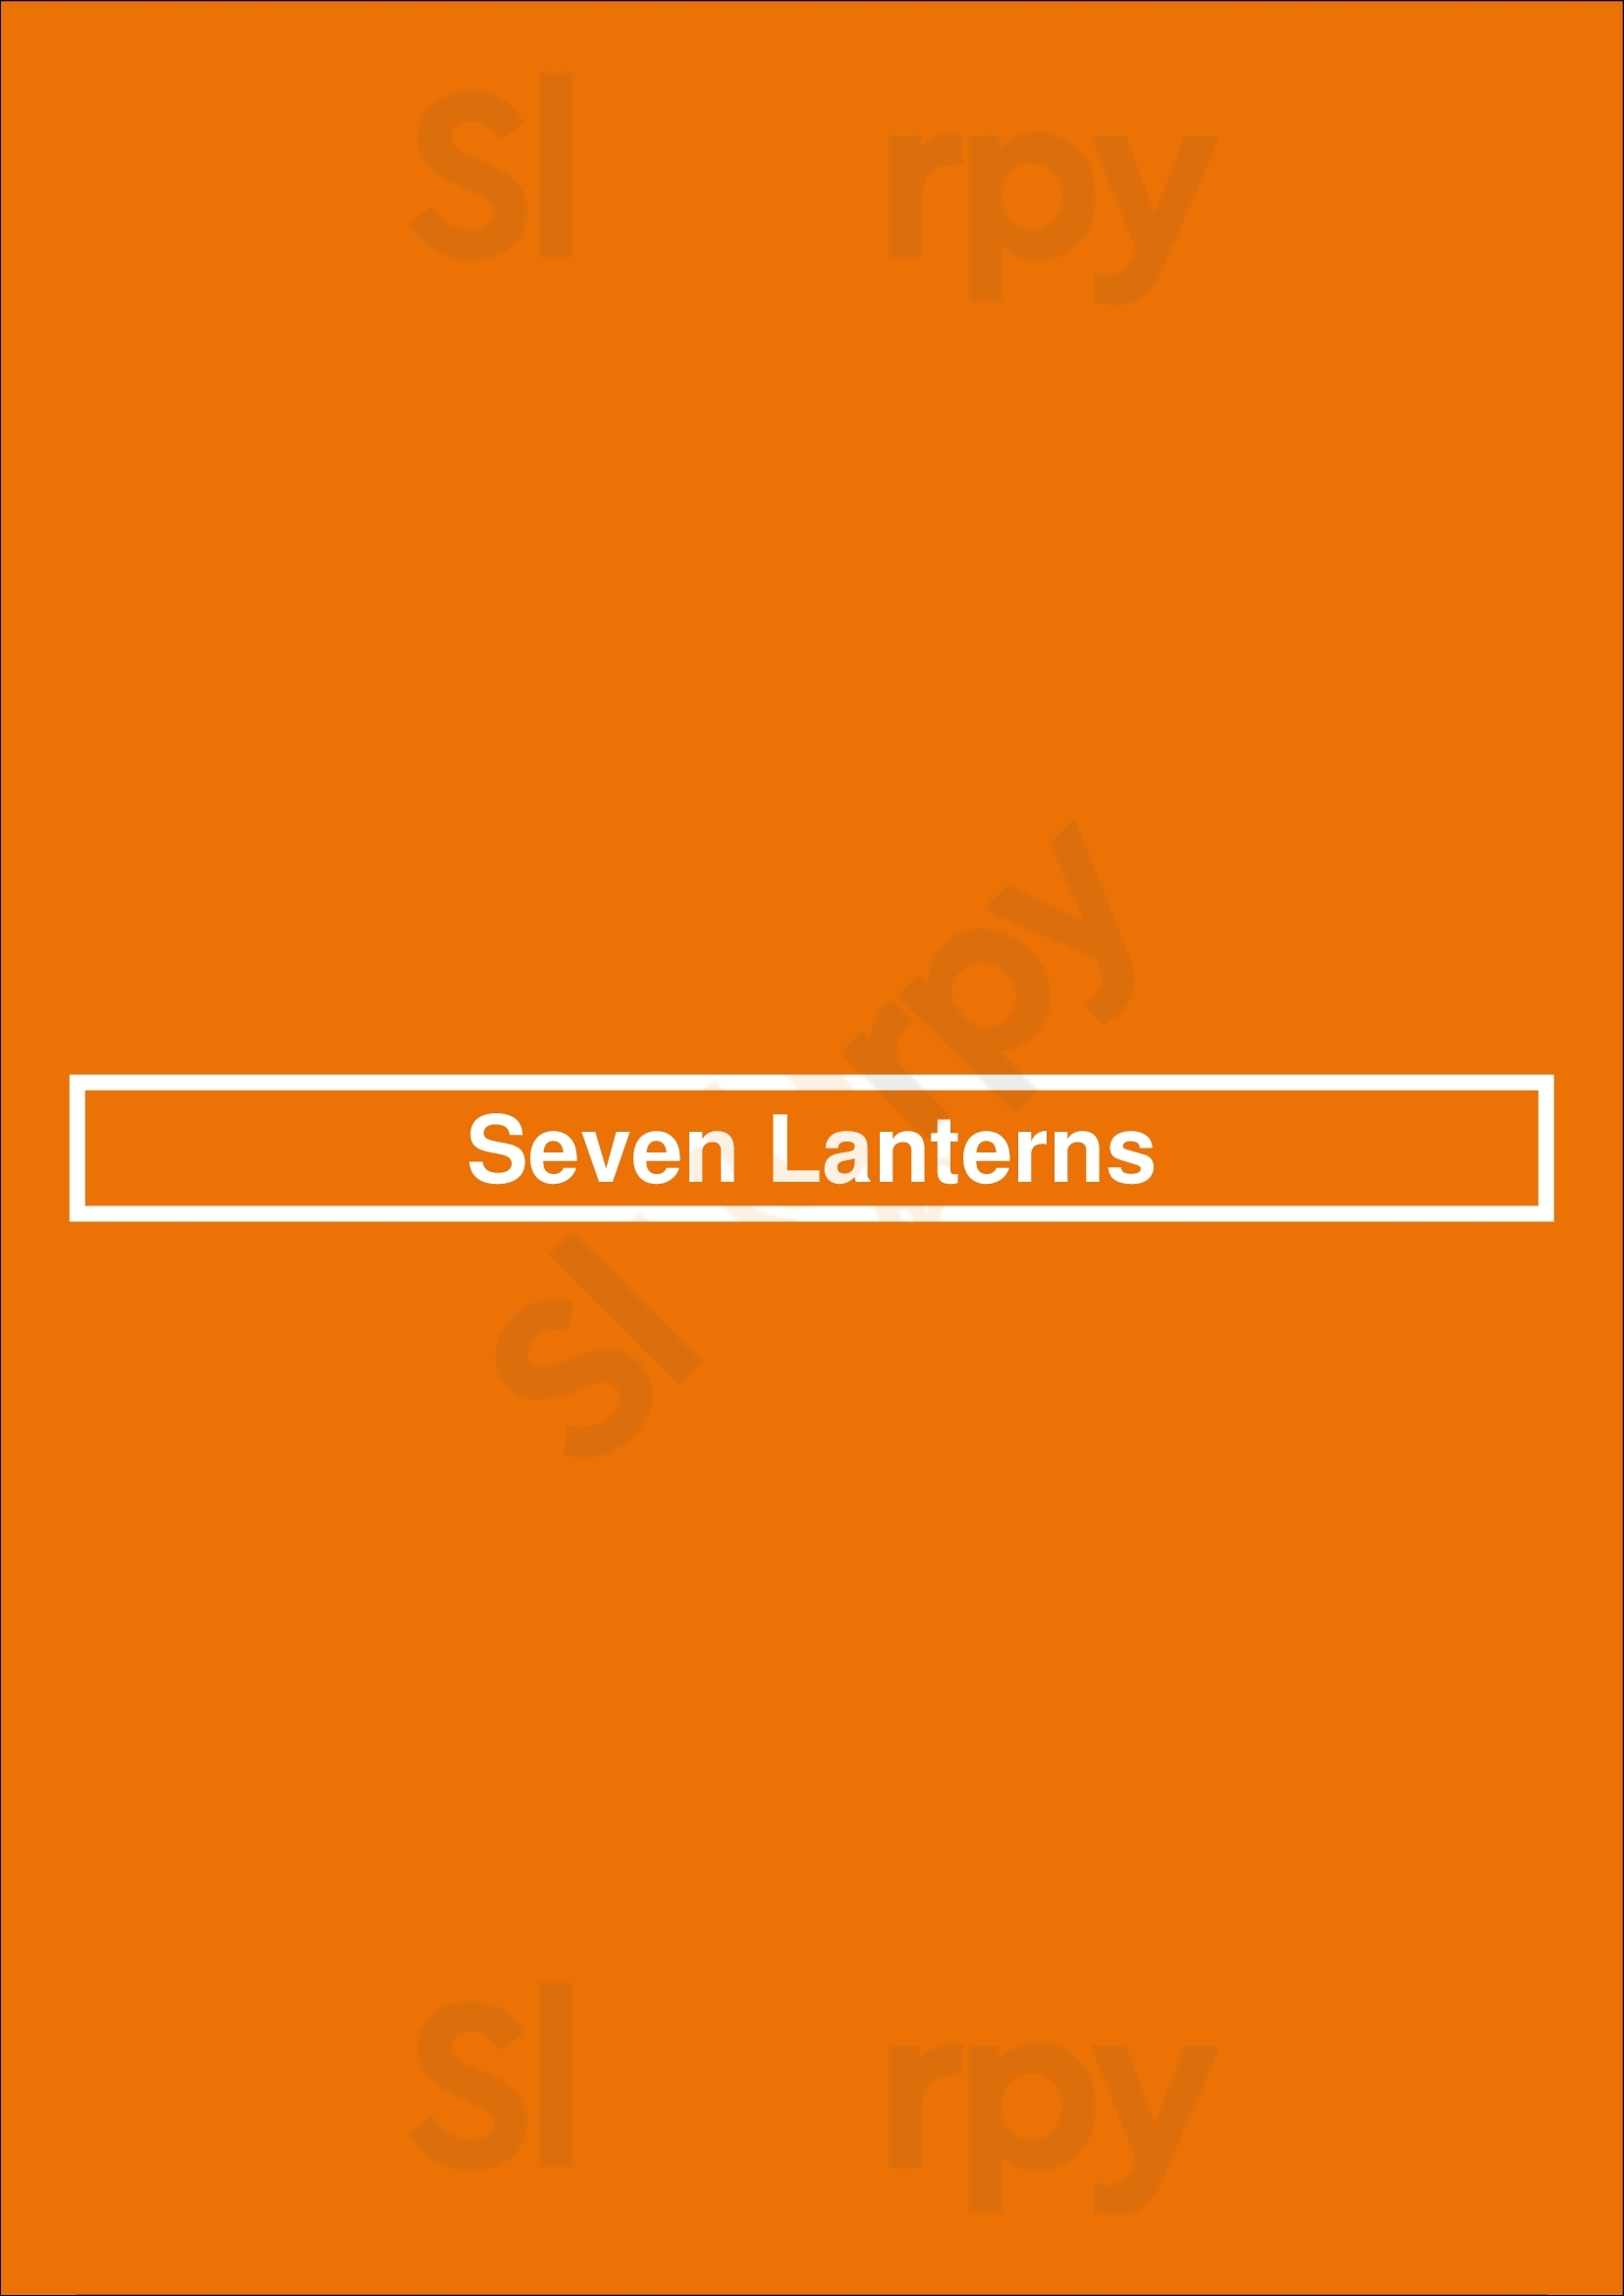 Seven Lanterns Sylvania Menu - 1